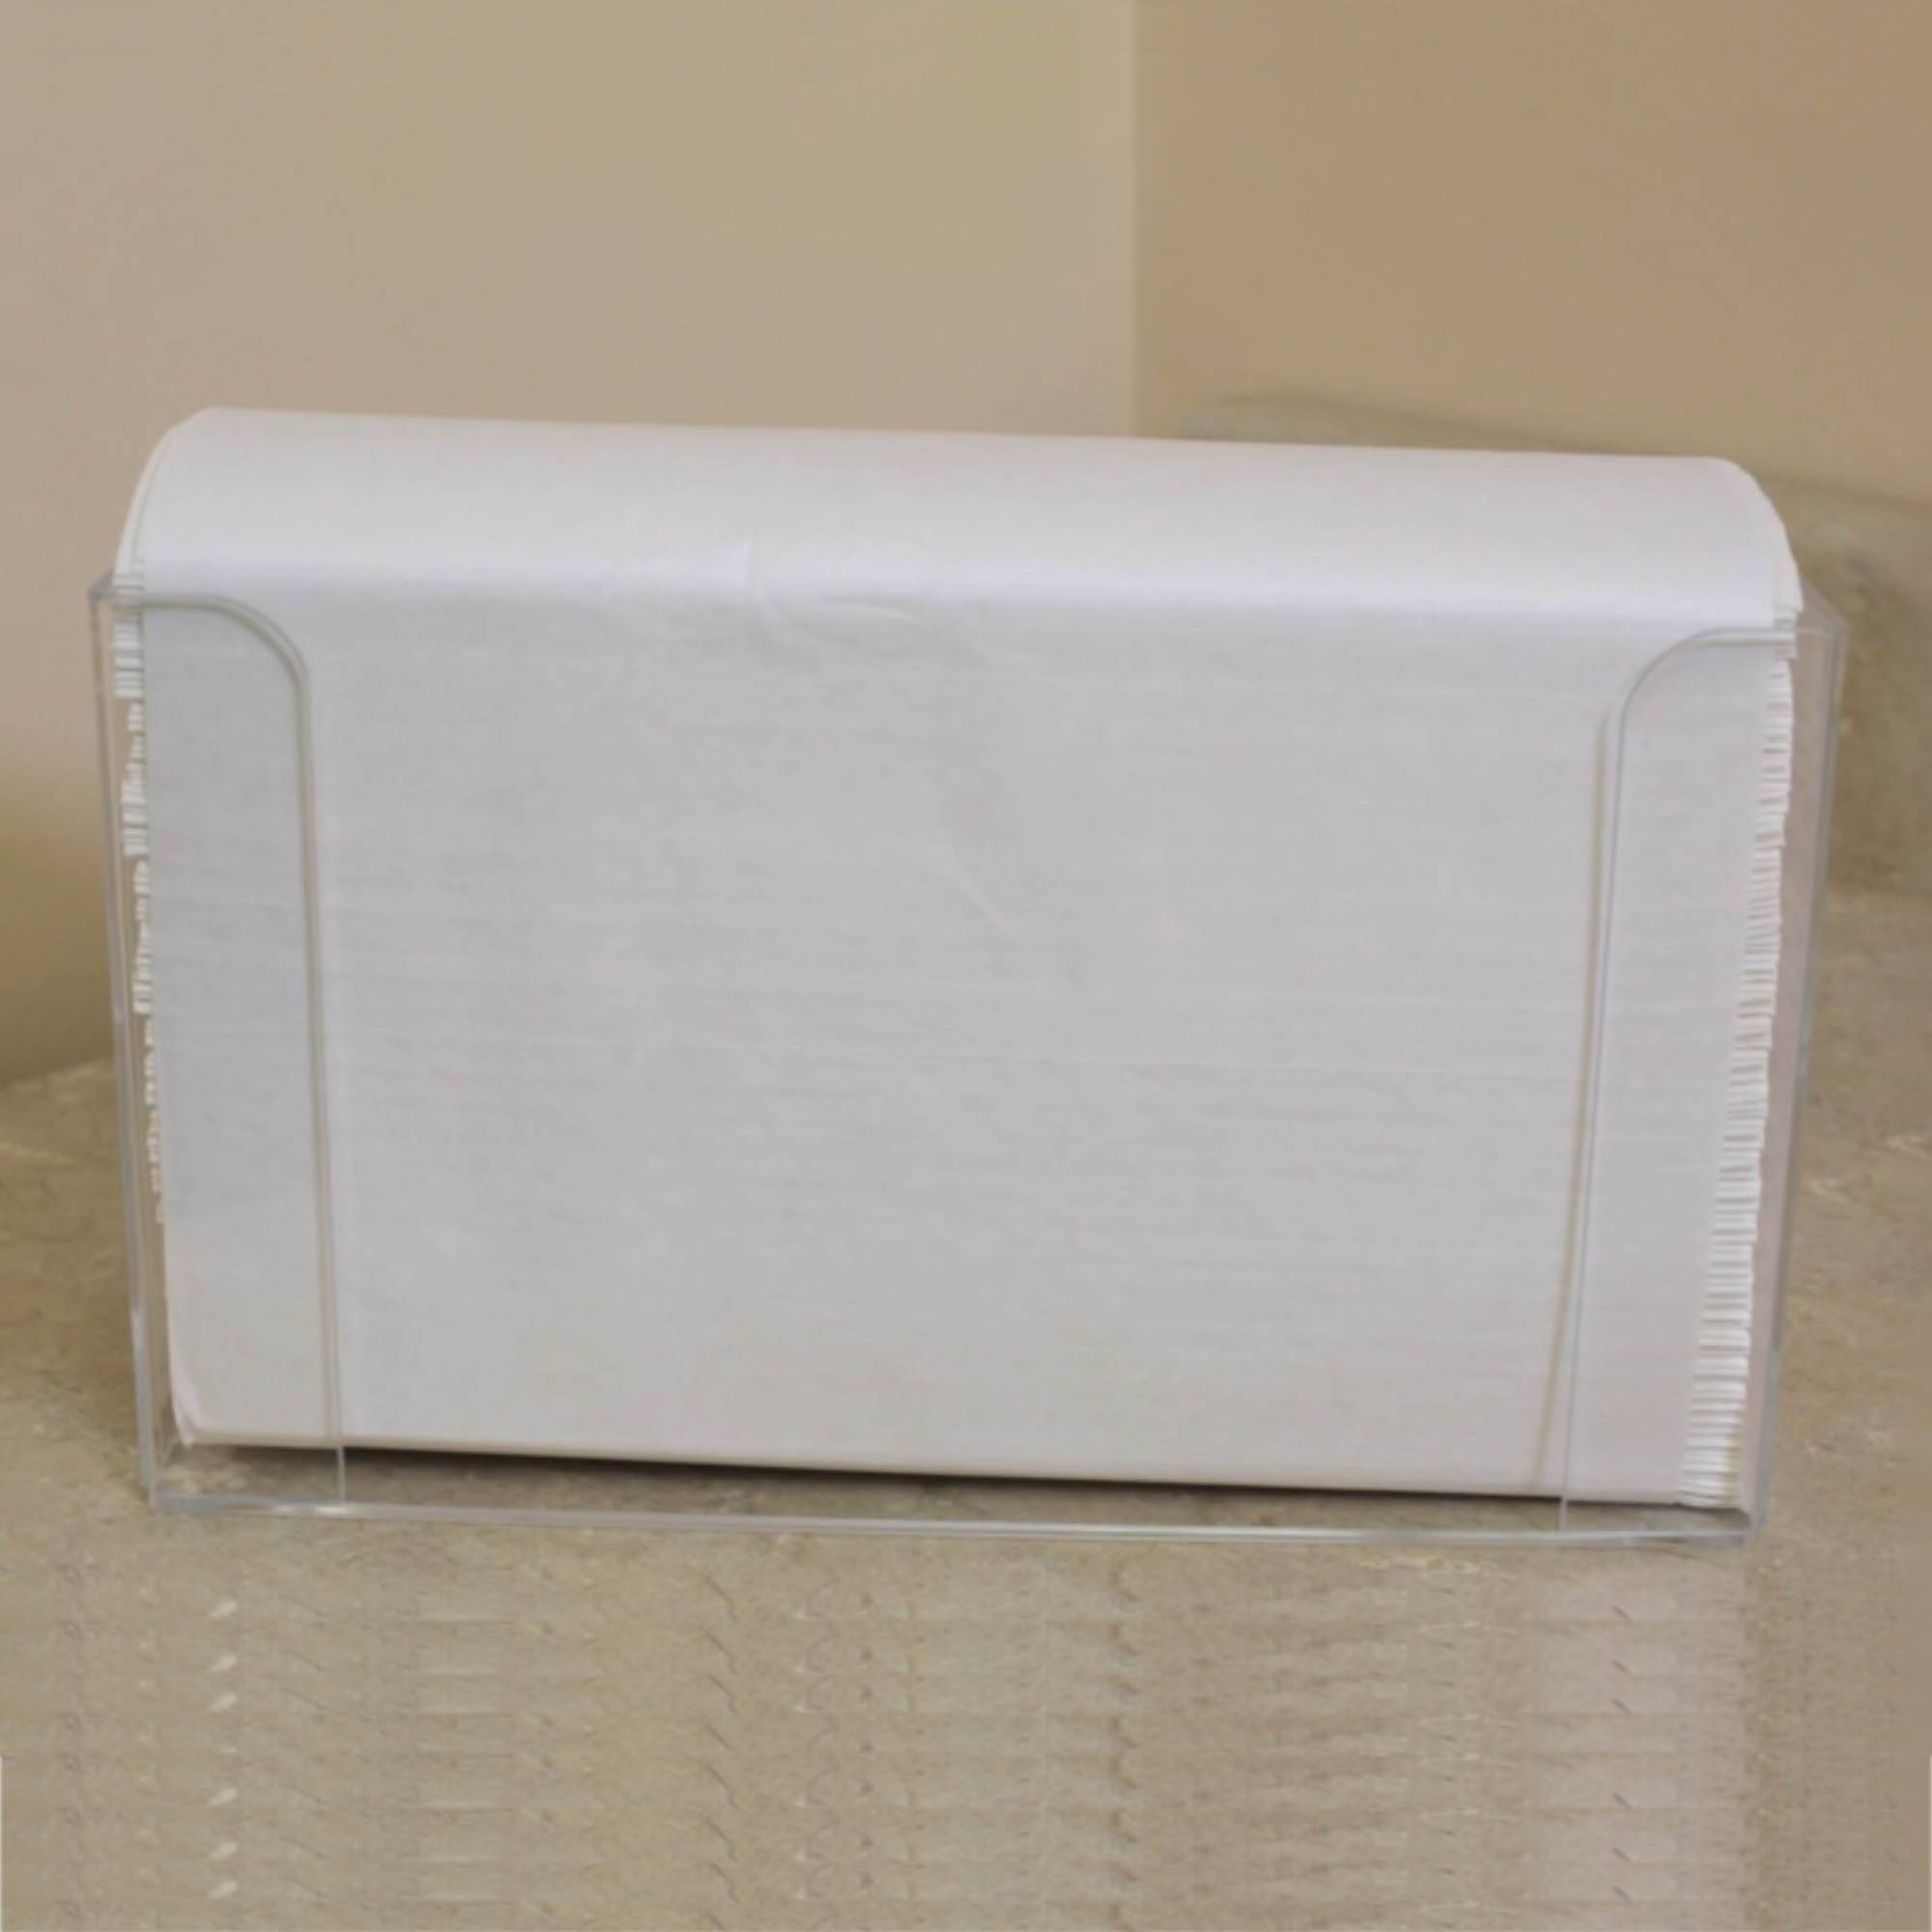 Acrylic Tri Fold Paper Towel Dispenser Um4527